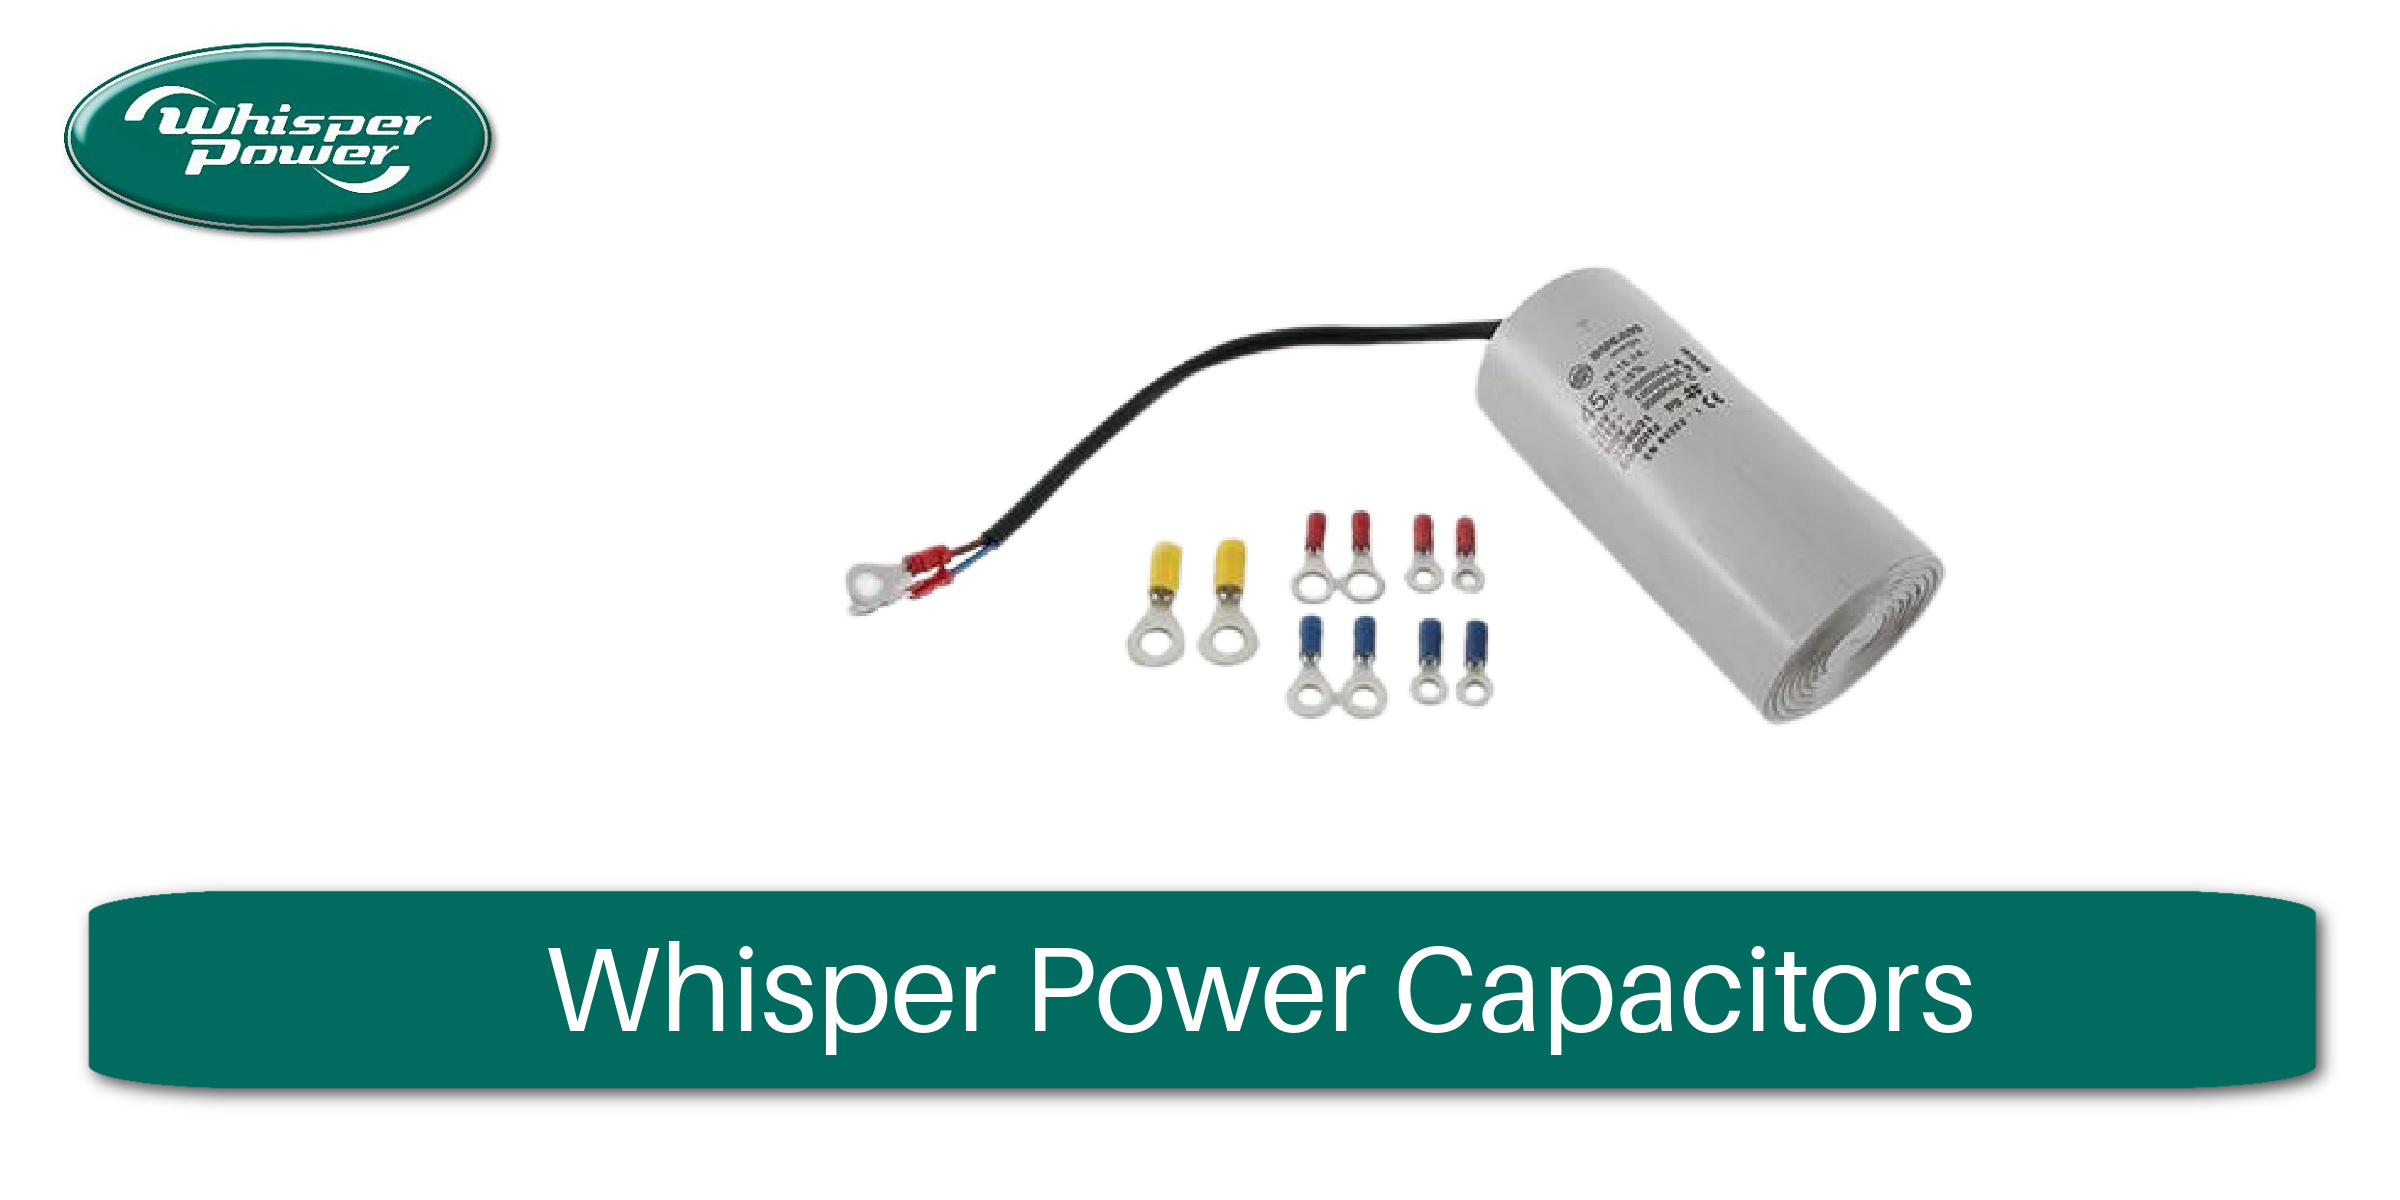 Whisper Power Capacitors